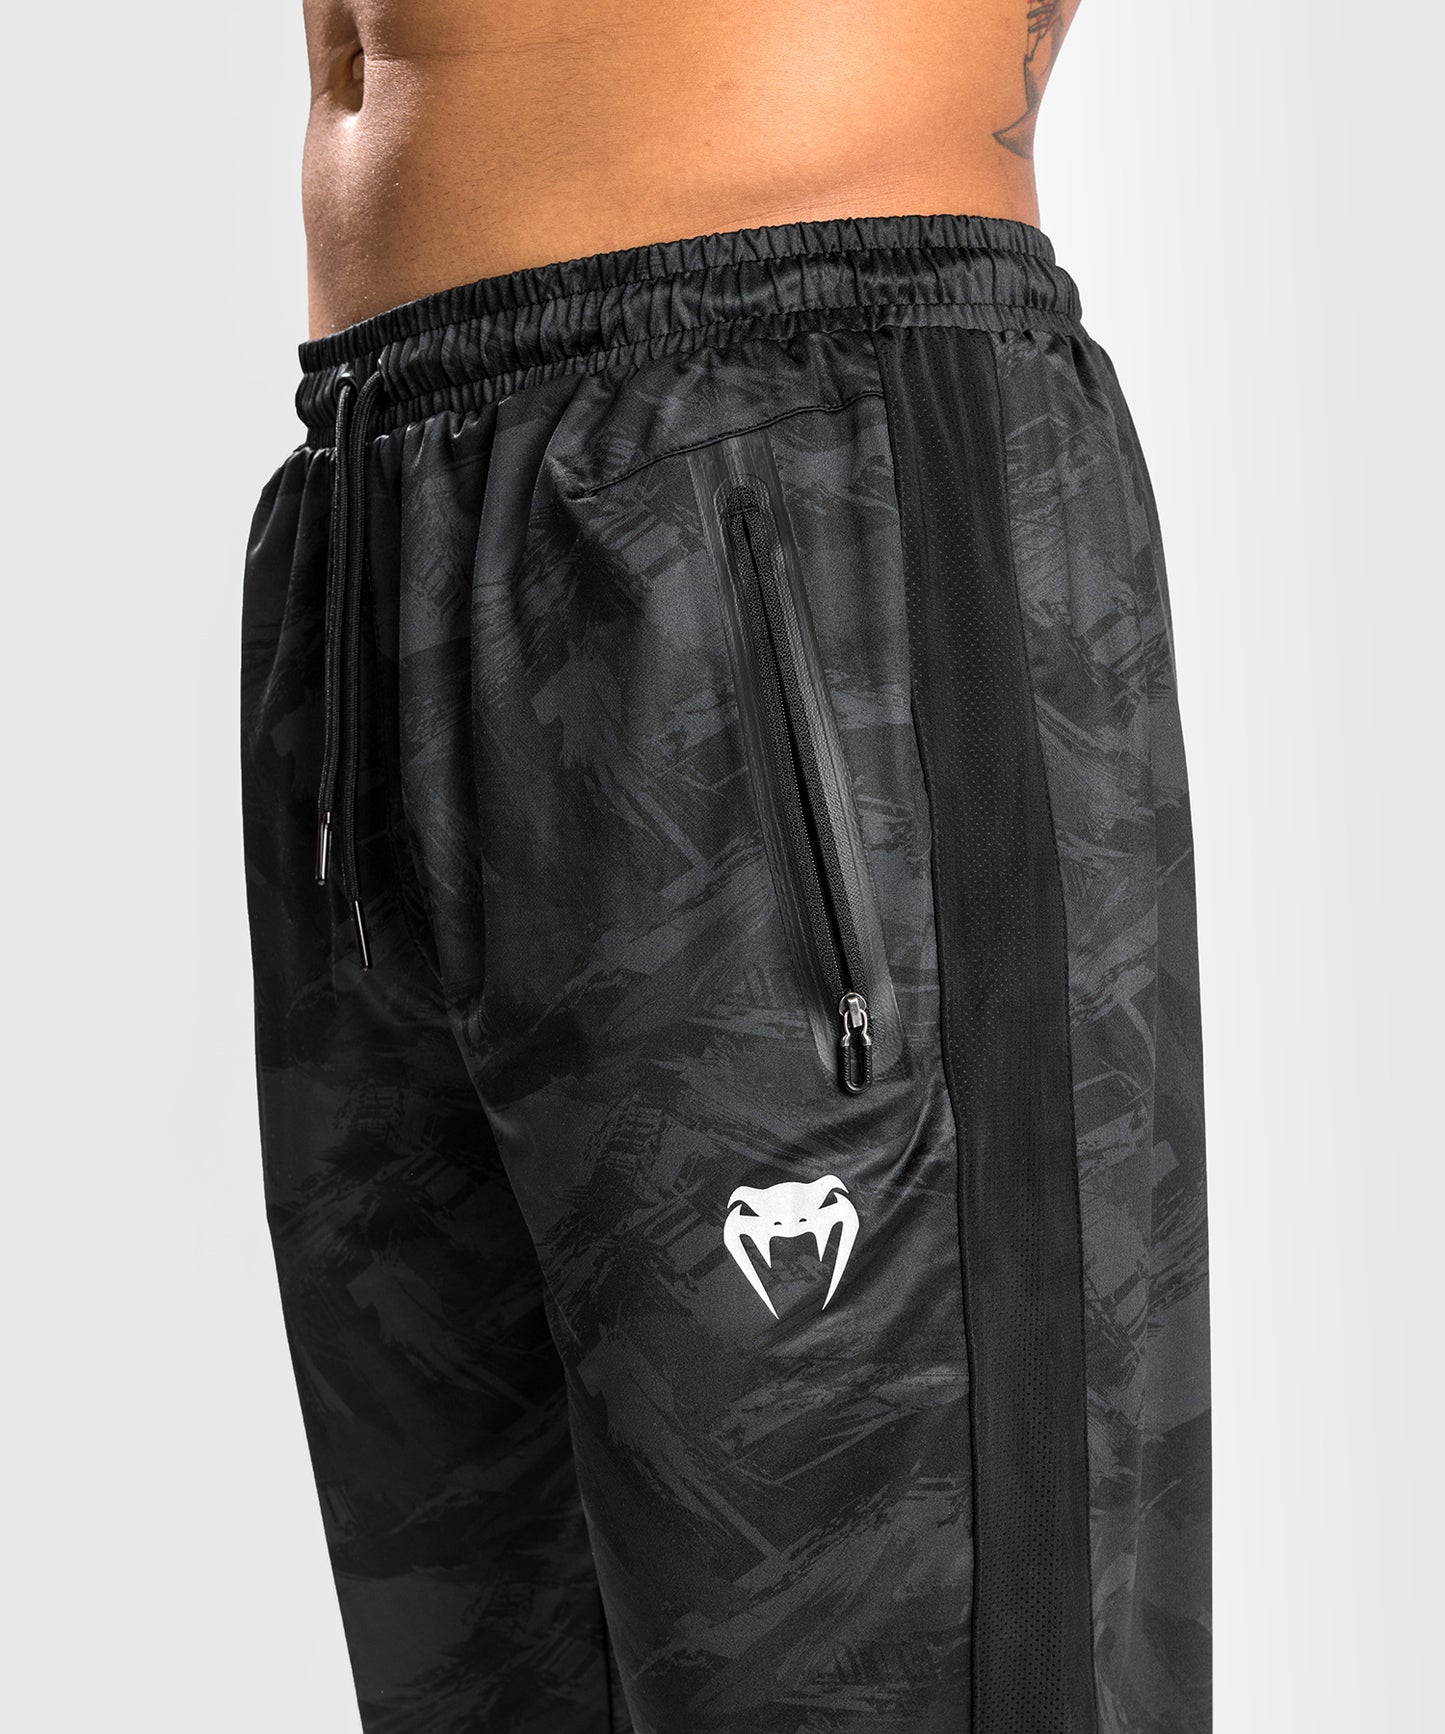 Pantalones de Jogging Venum Electron 3.0 - Negro